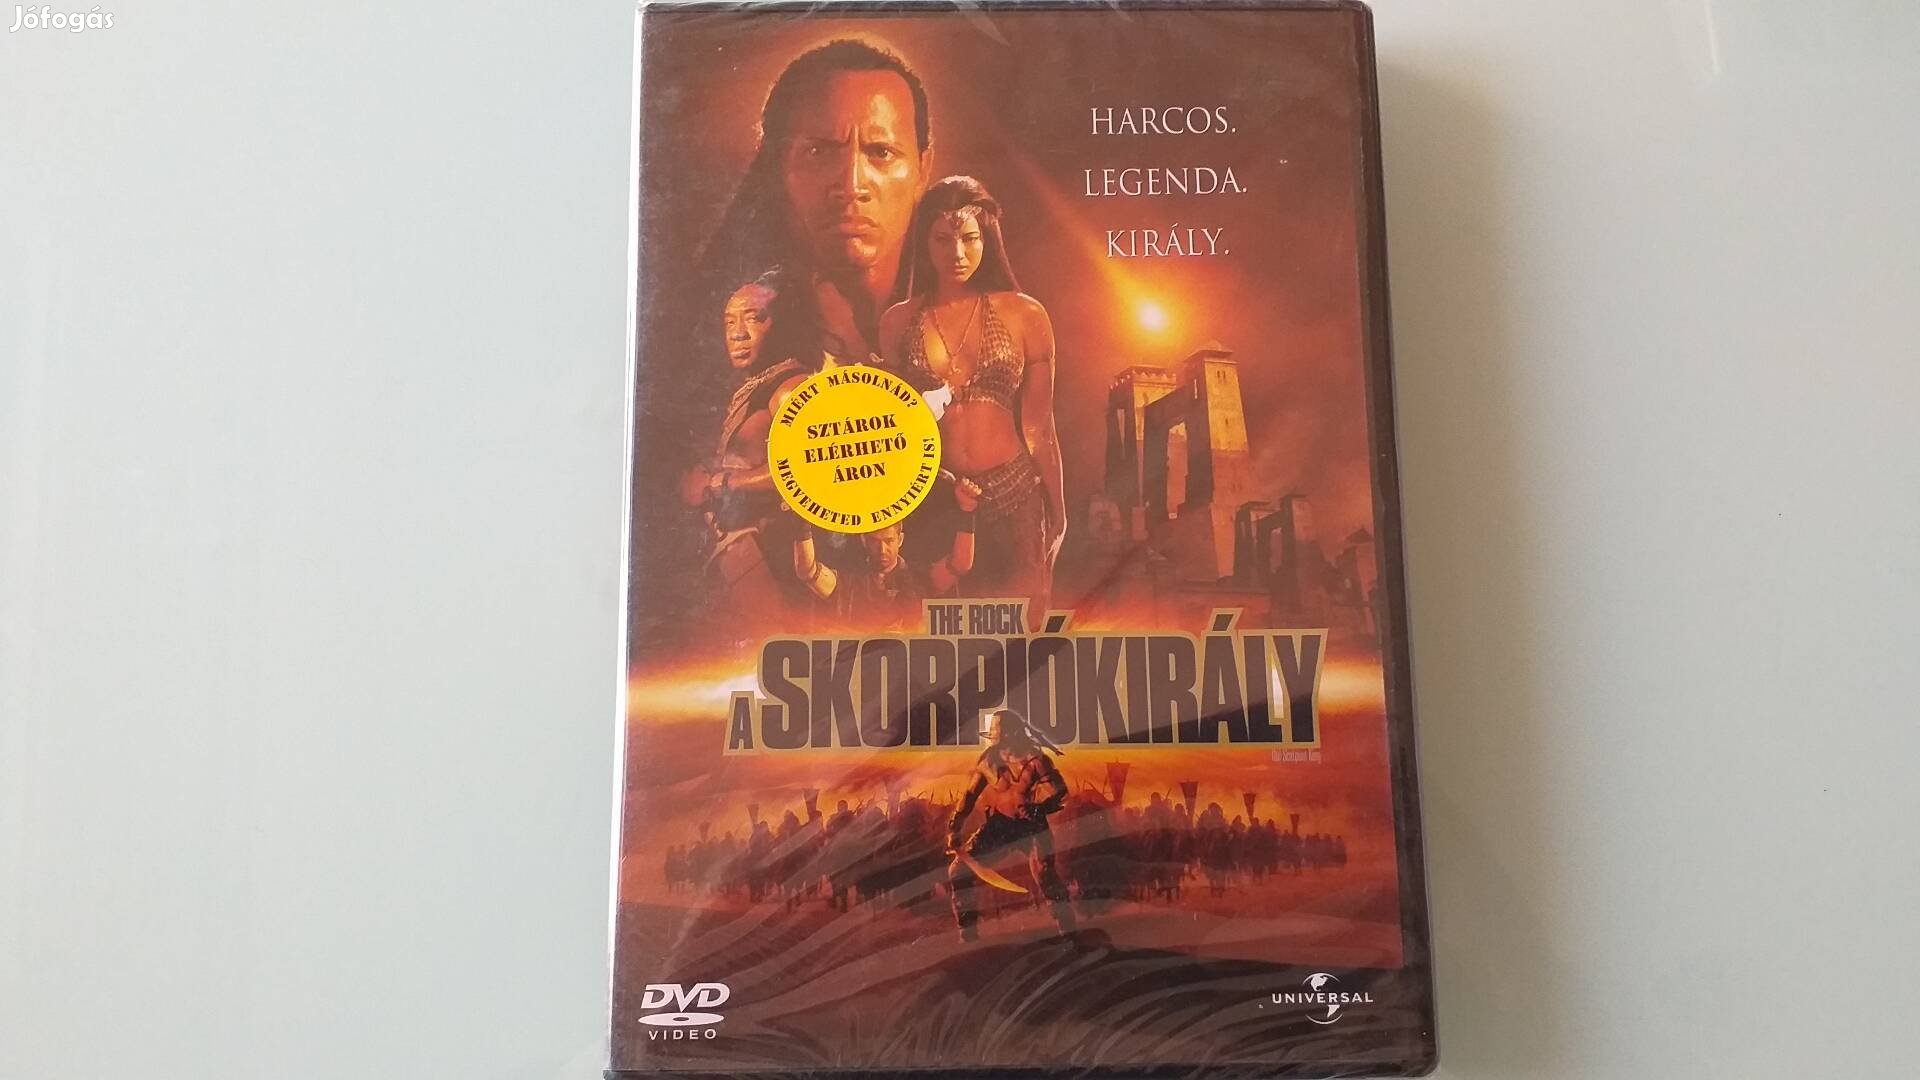 Skorpió király DVD film